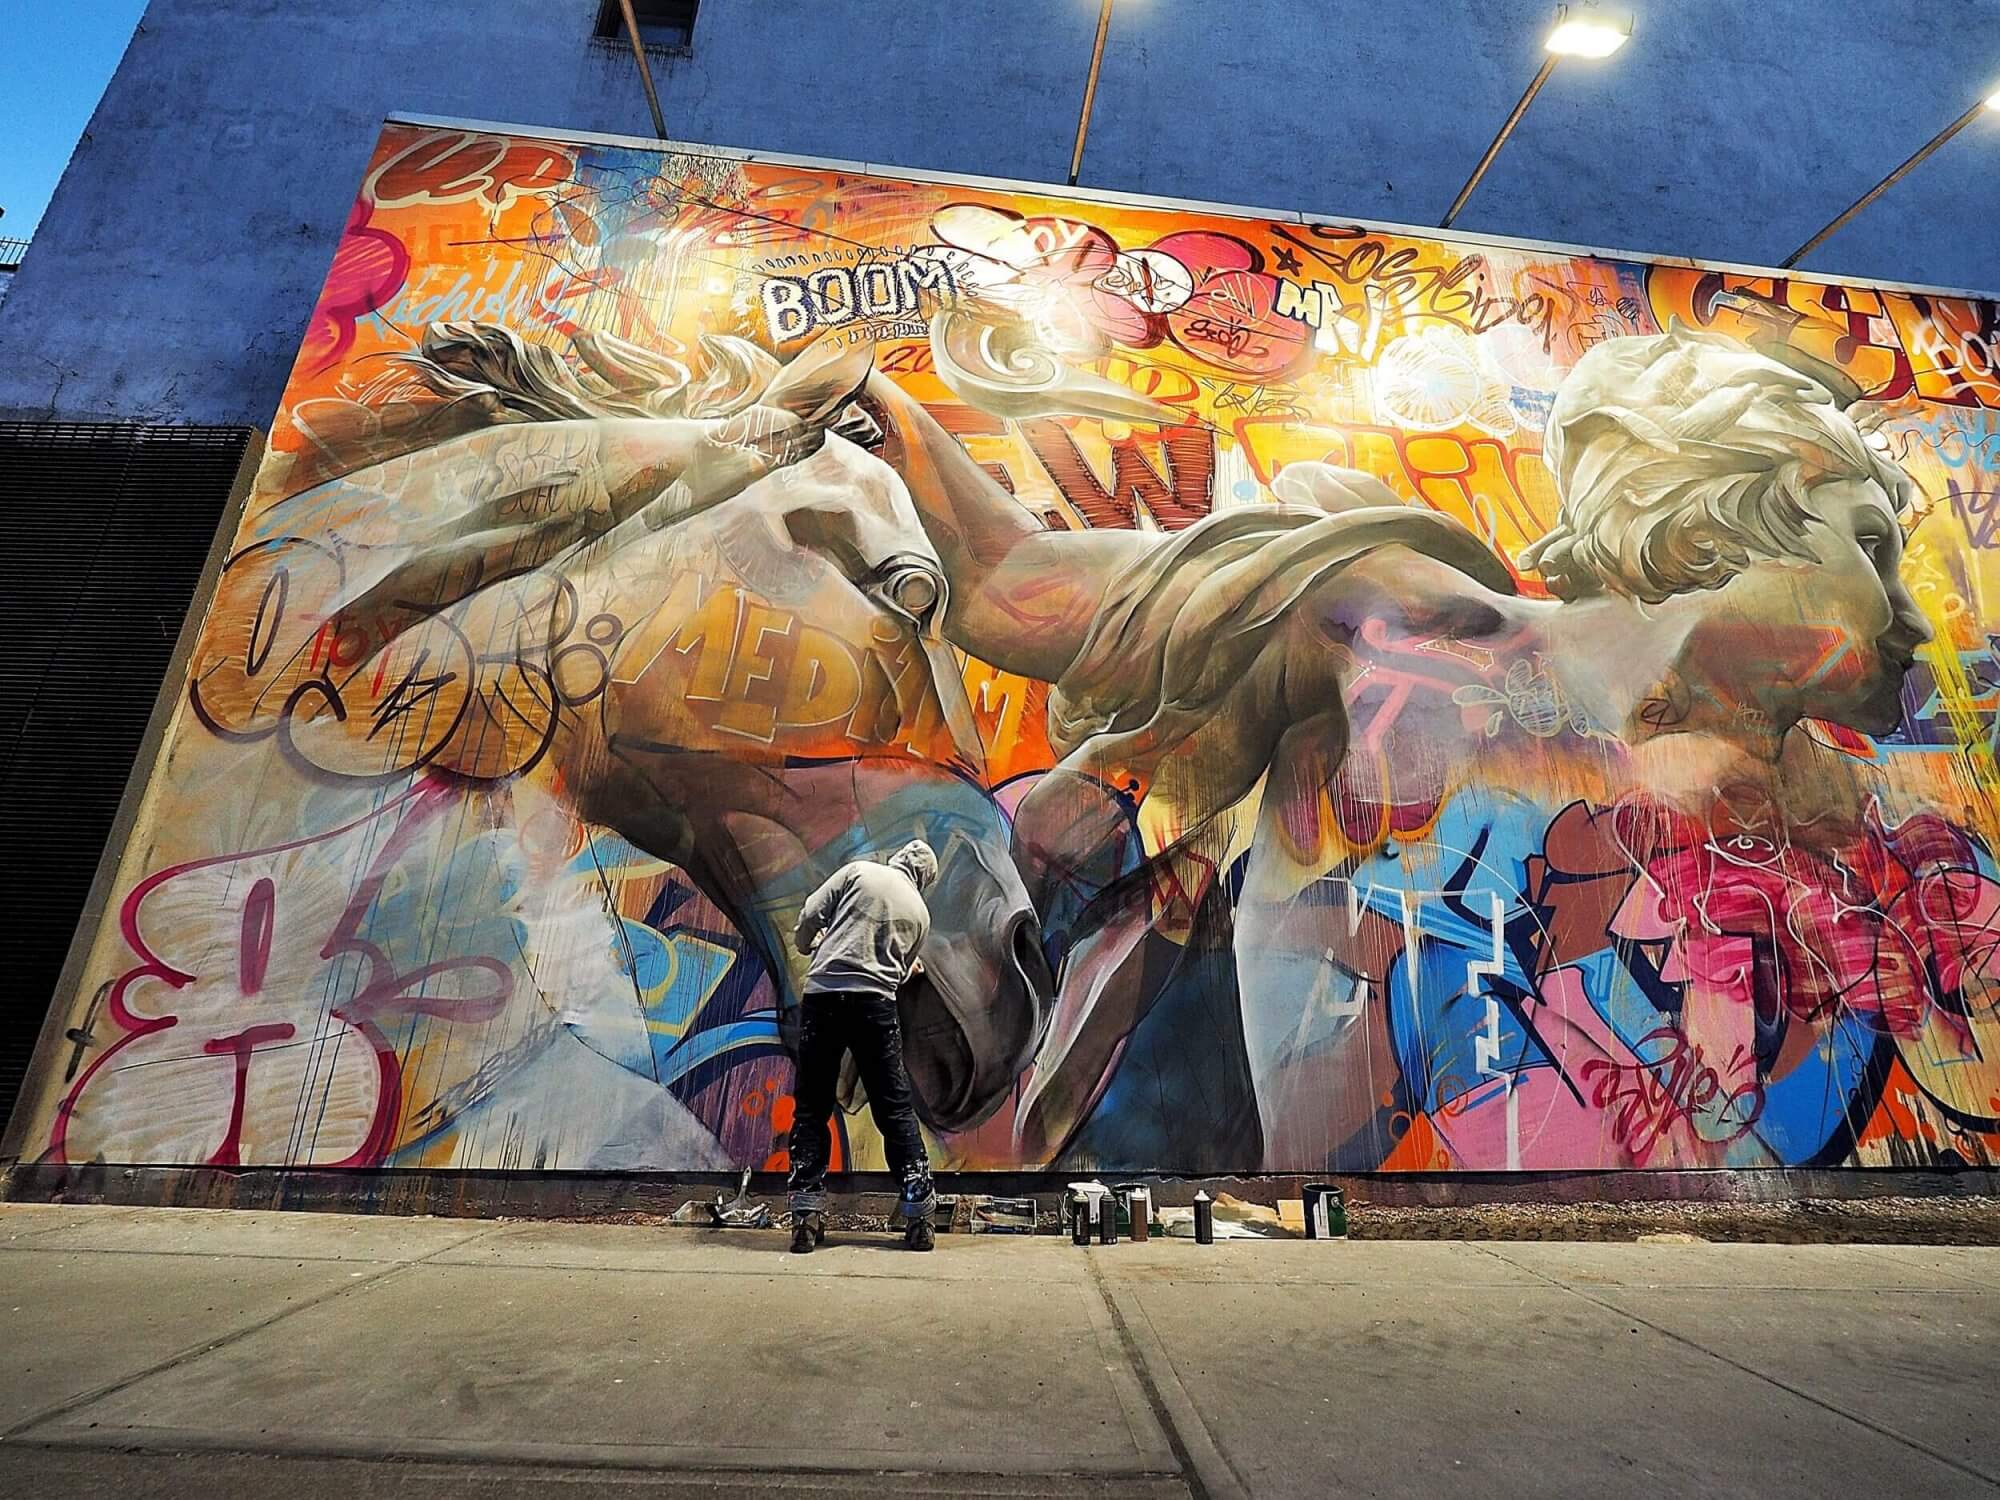 PichiAvo, Houston Bowery Street Art Wall, New York. Photo credit @just_a_spectator